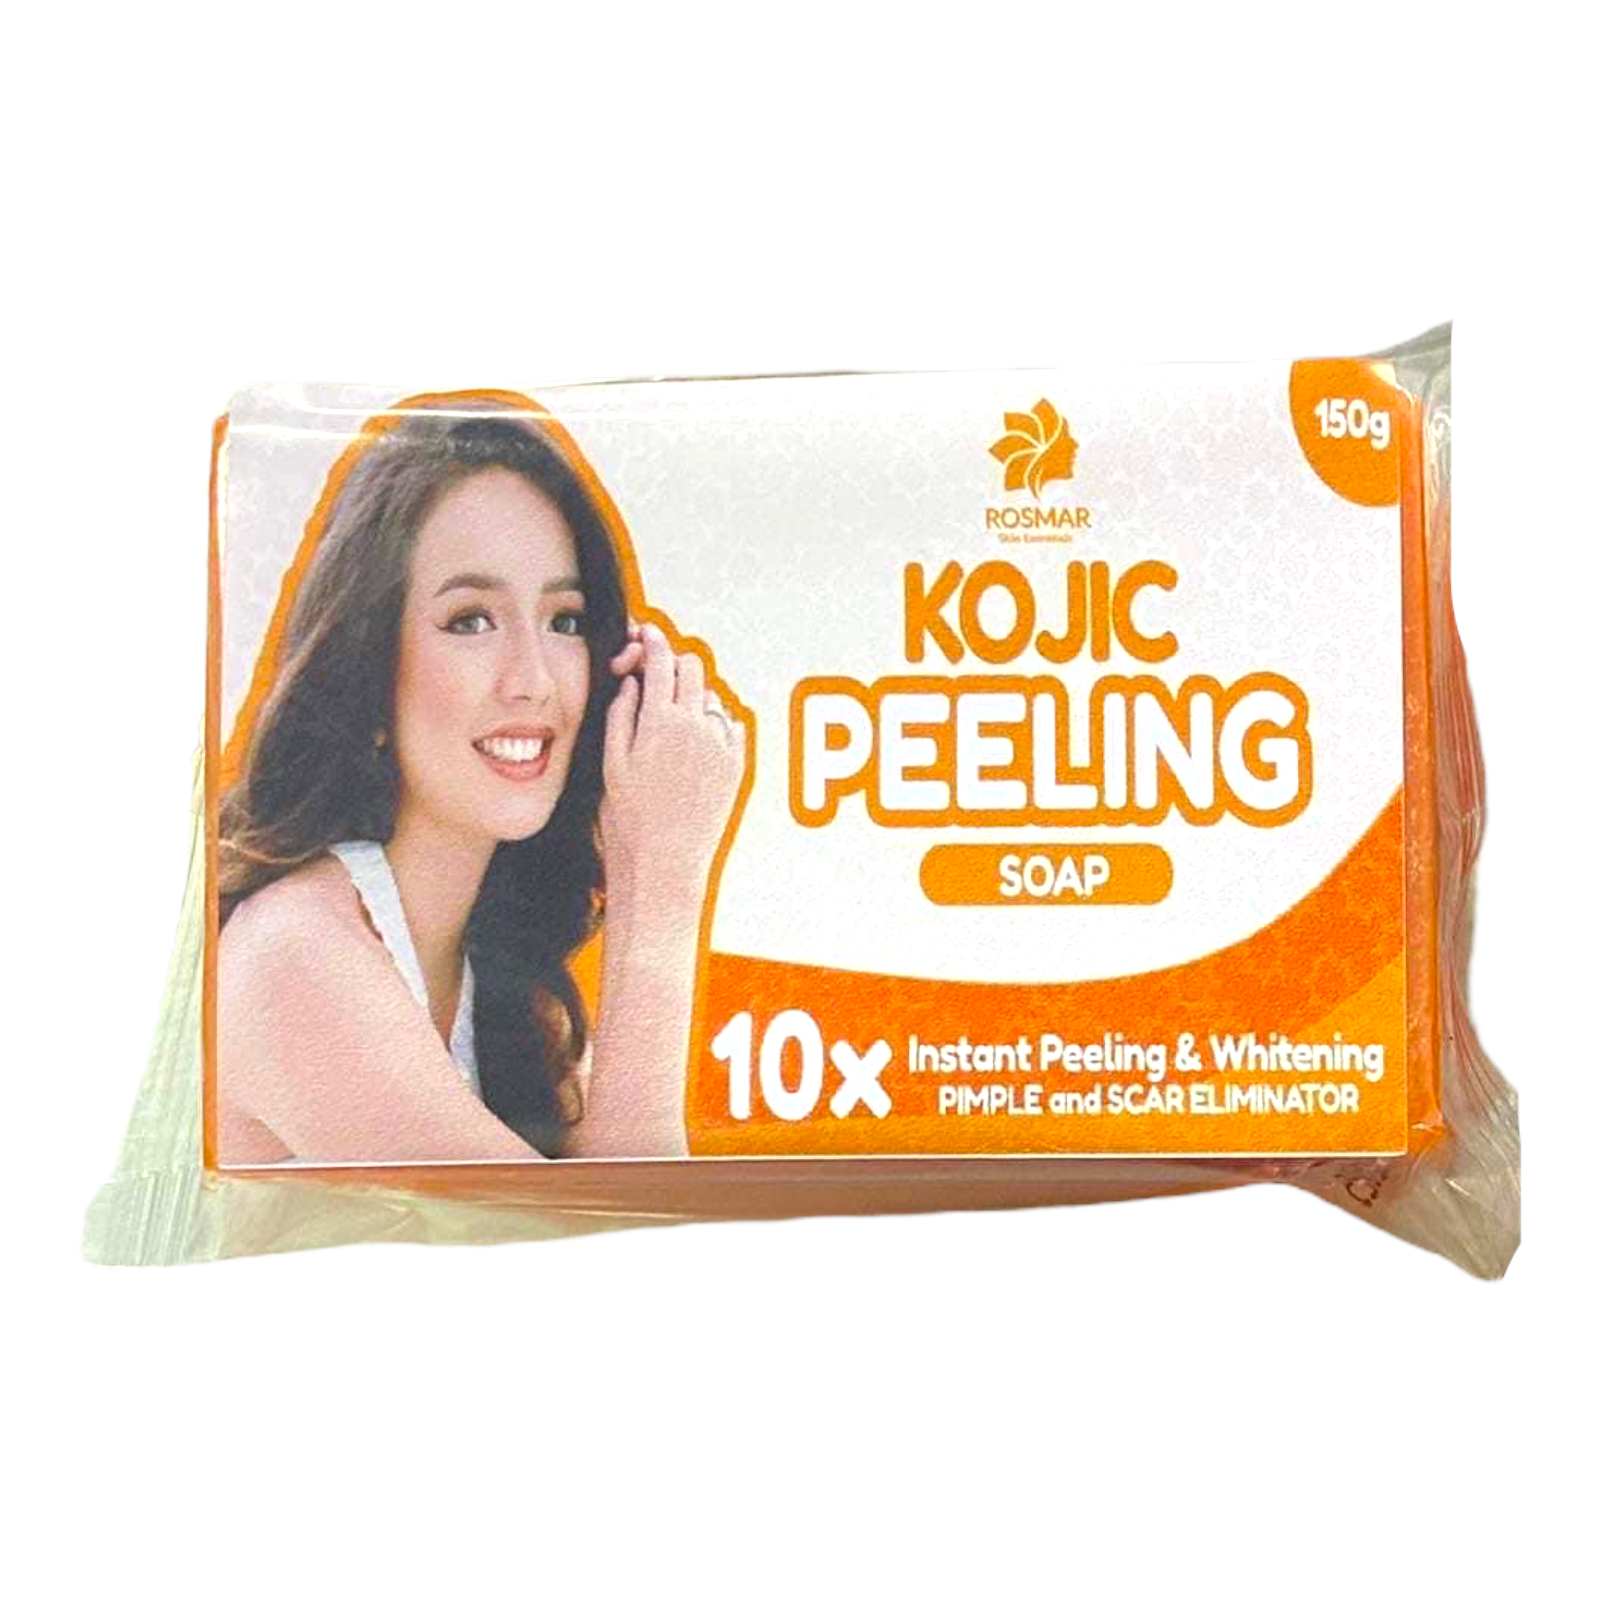 Rosmar - Kojic Peeling Soap 150g